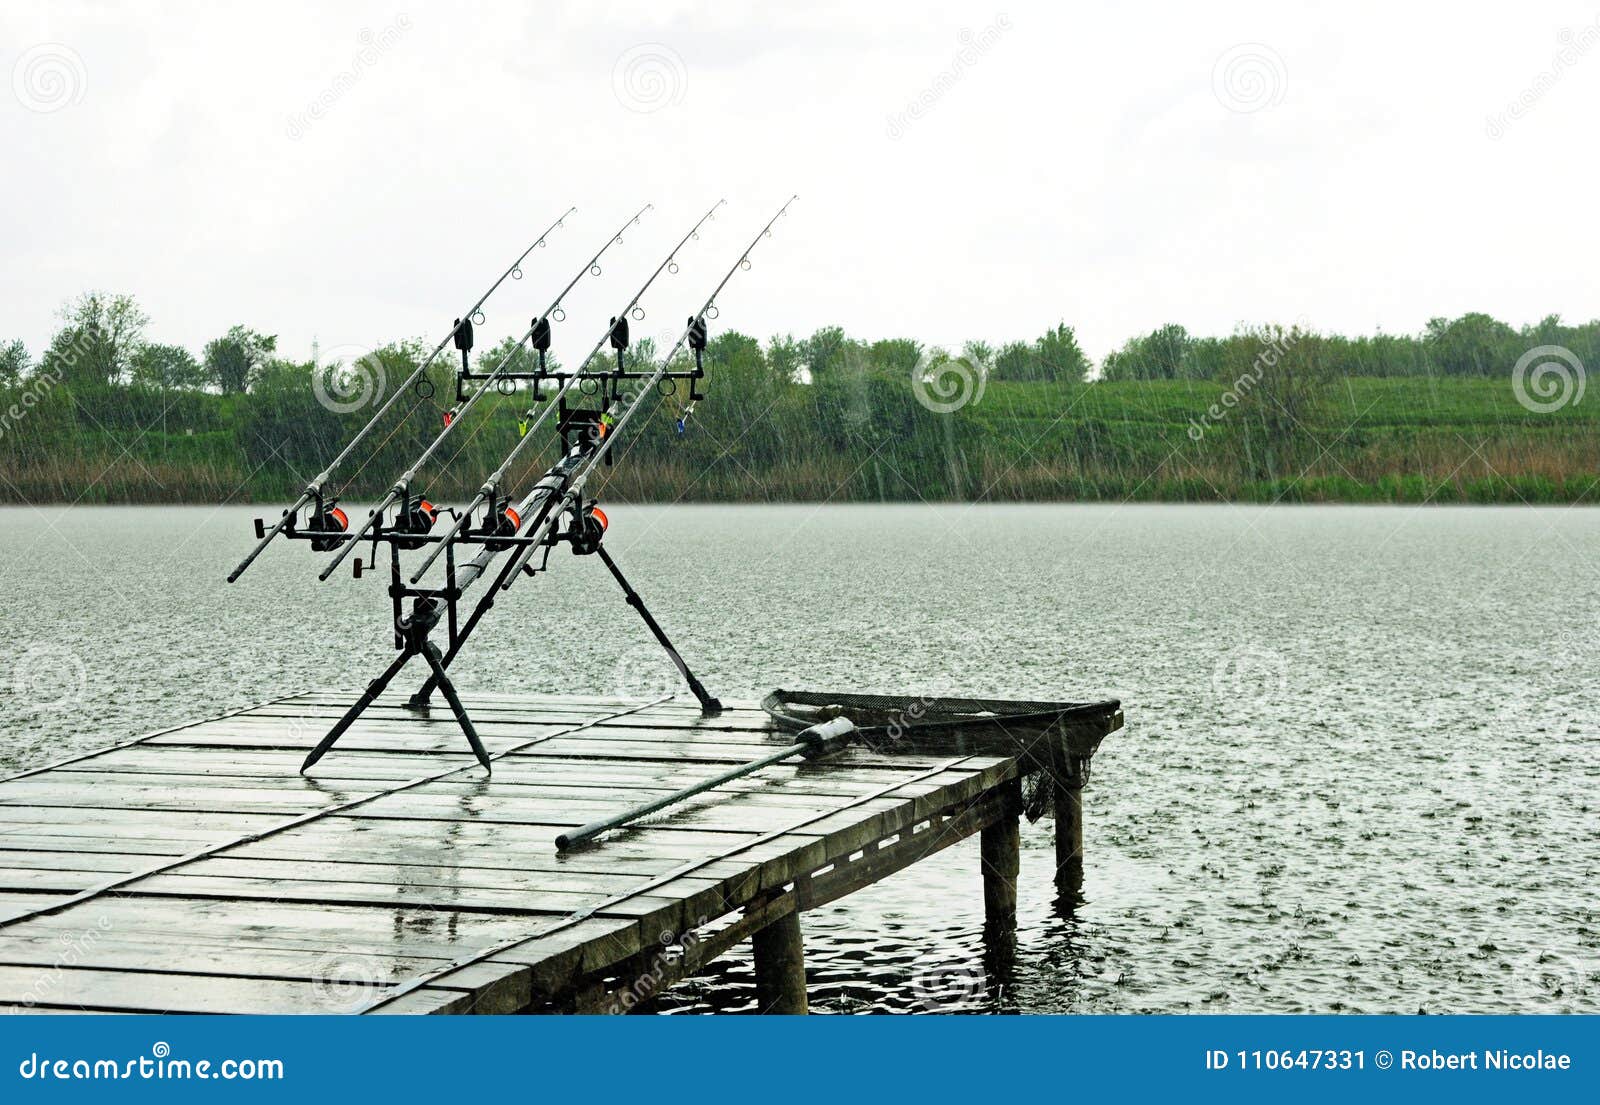 Carp Fishing with Carp Rods on a Rod Pod in Rain Stock Image